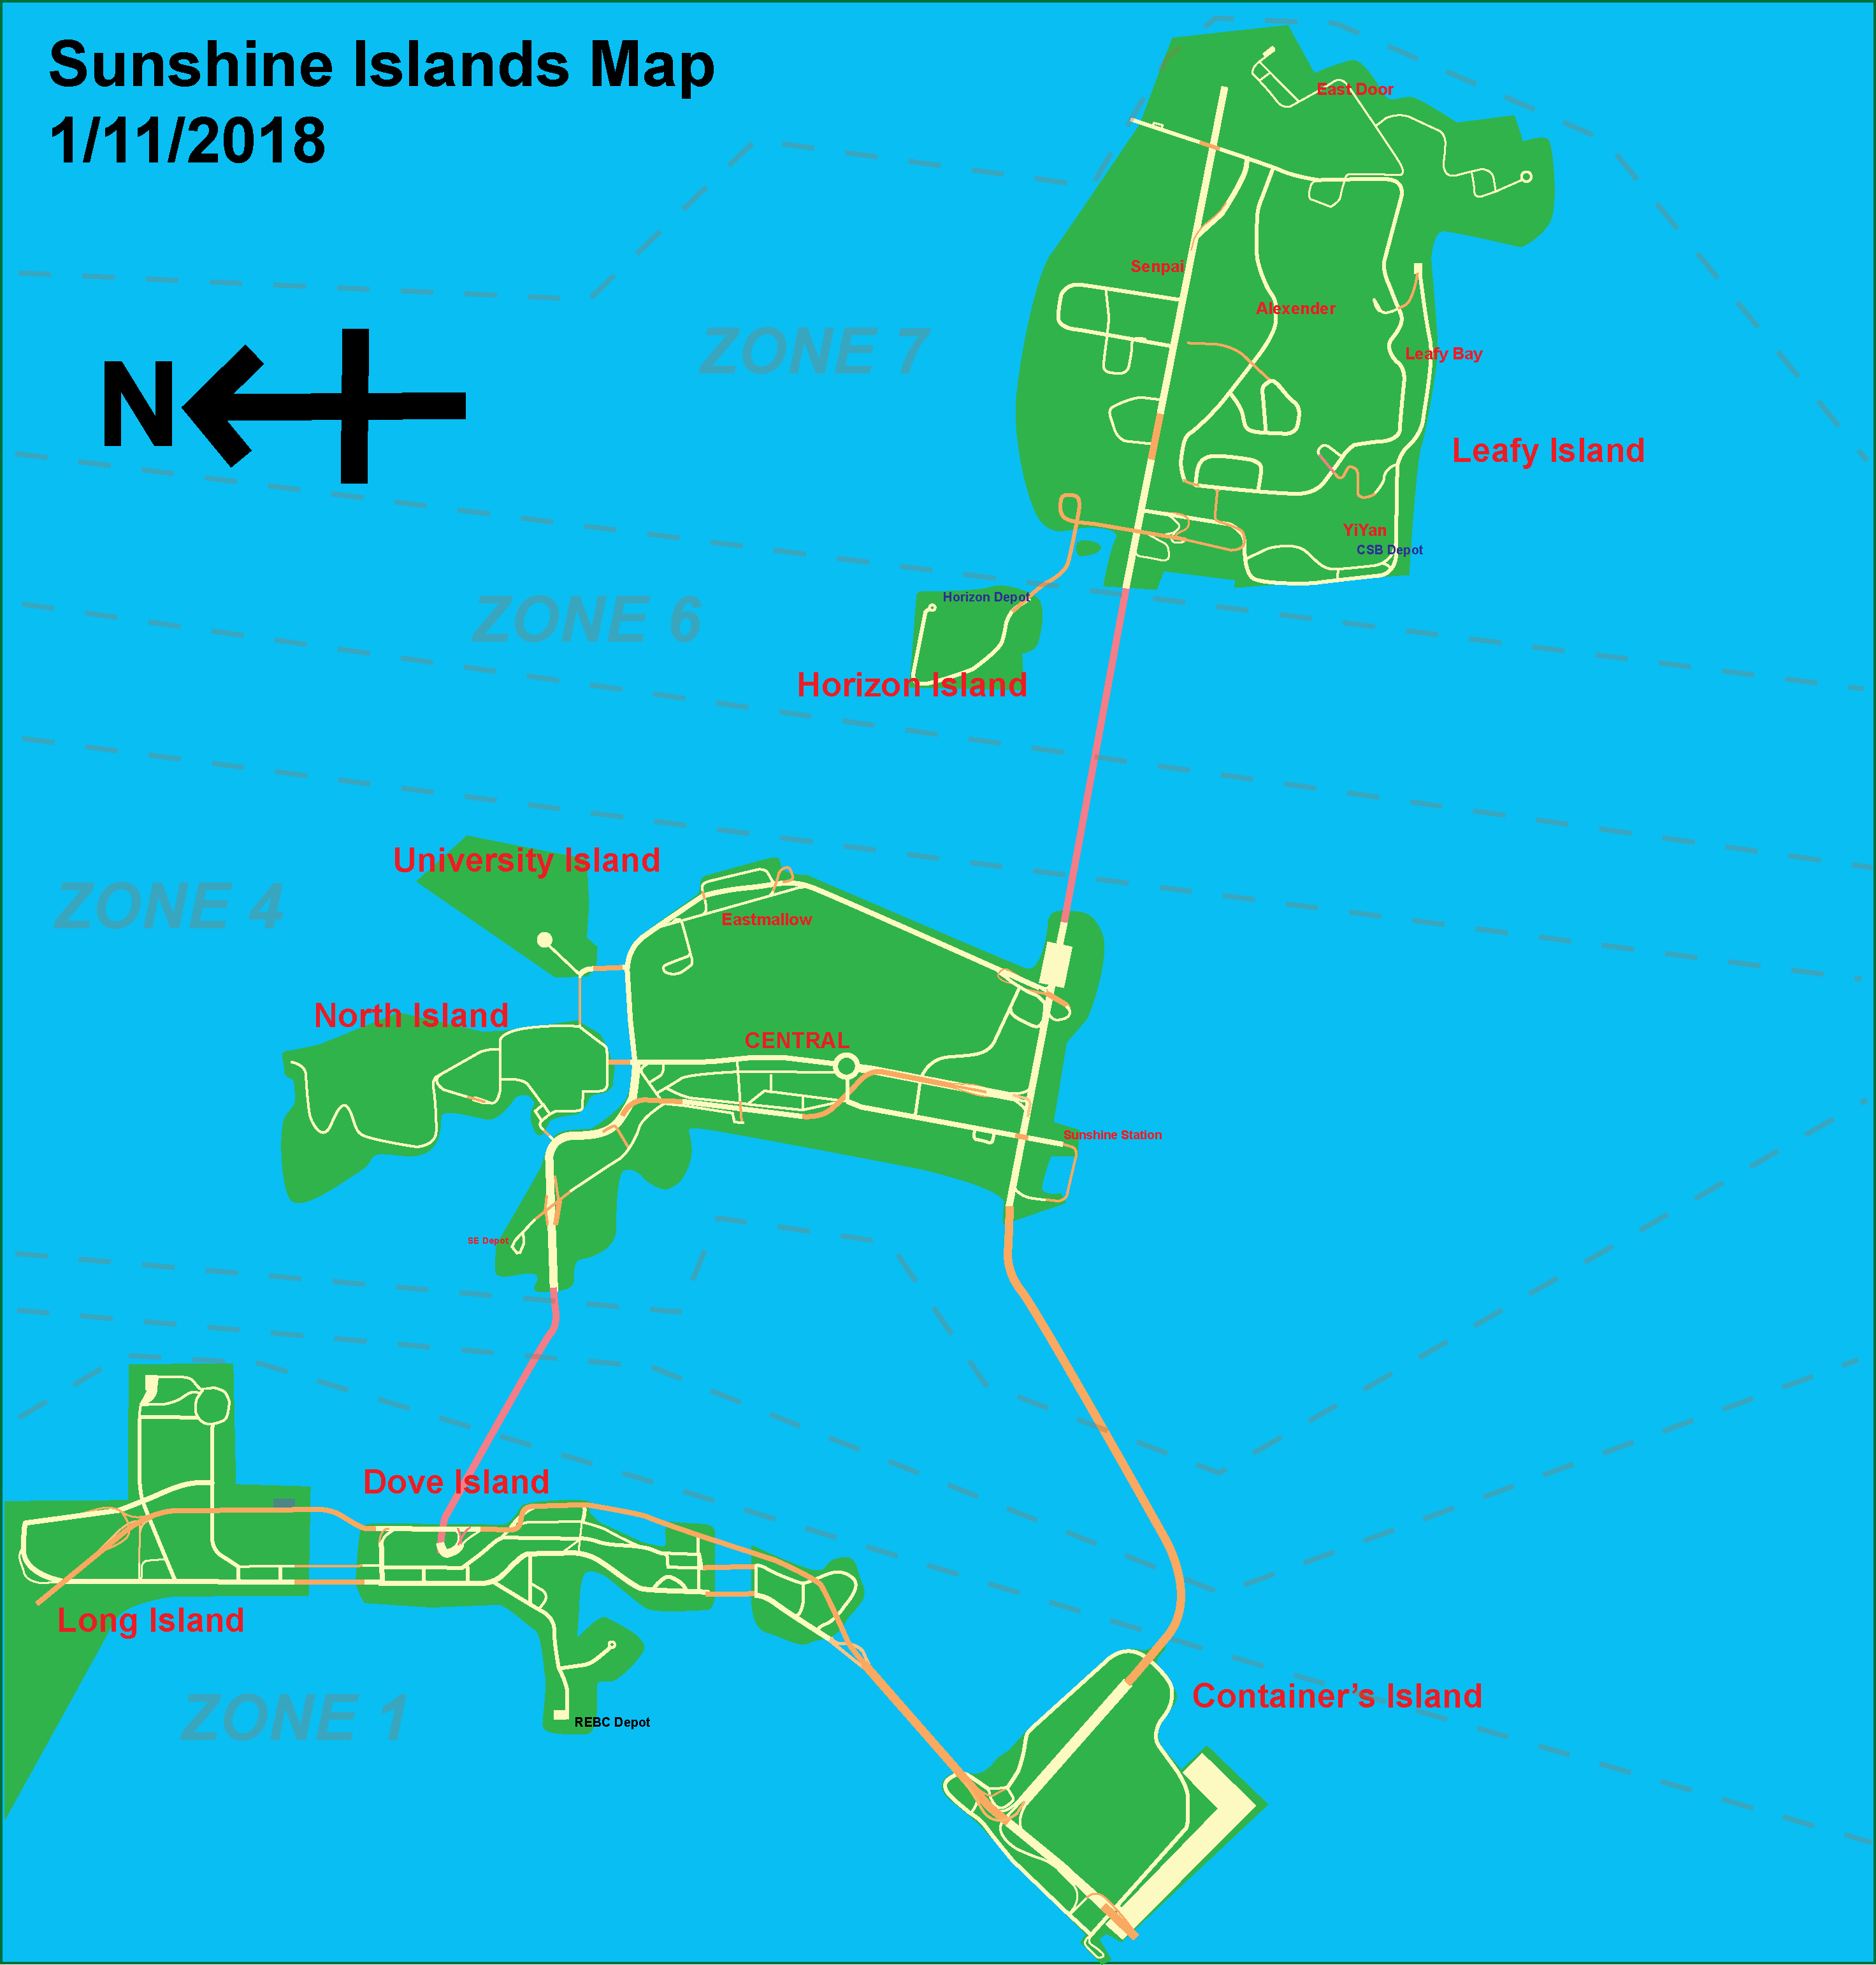 where is mario sunshine islands based